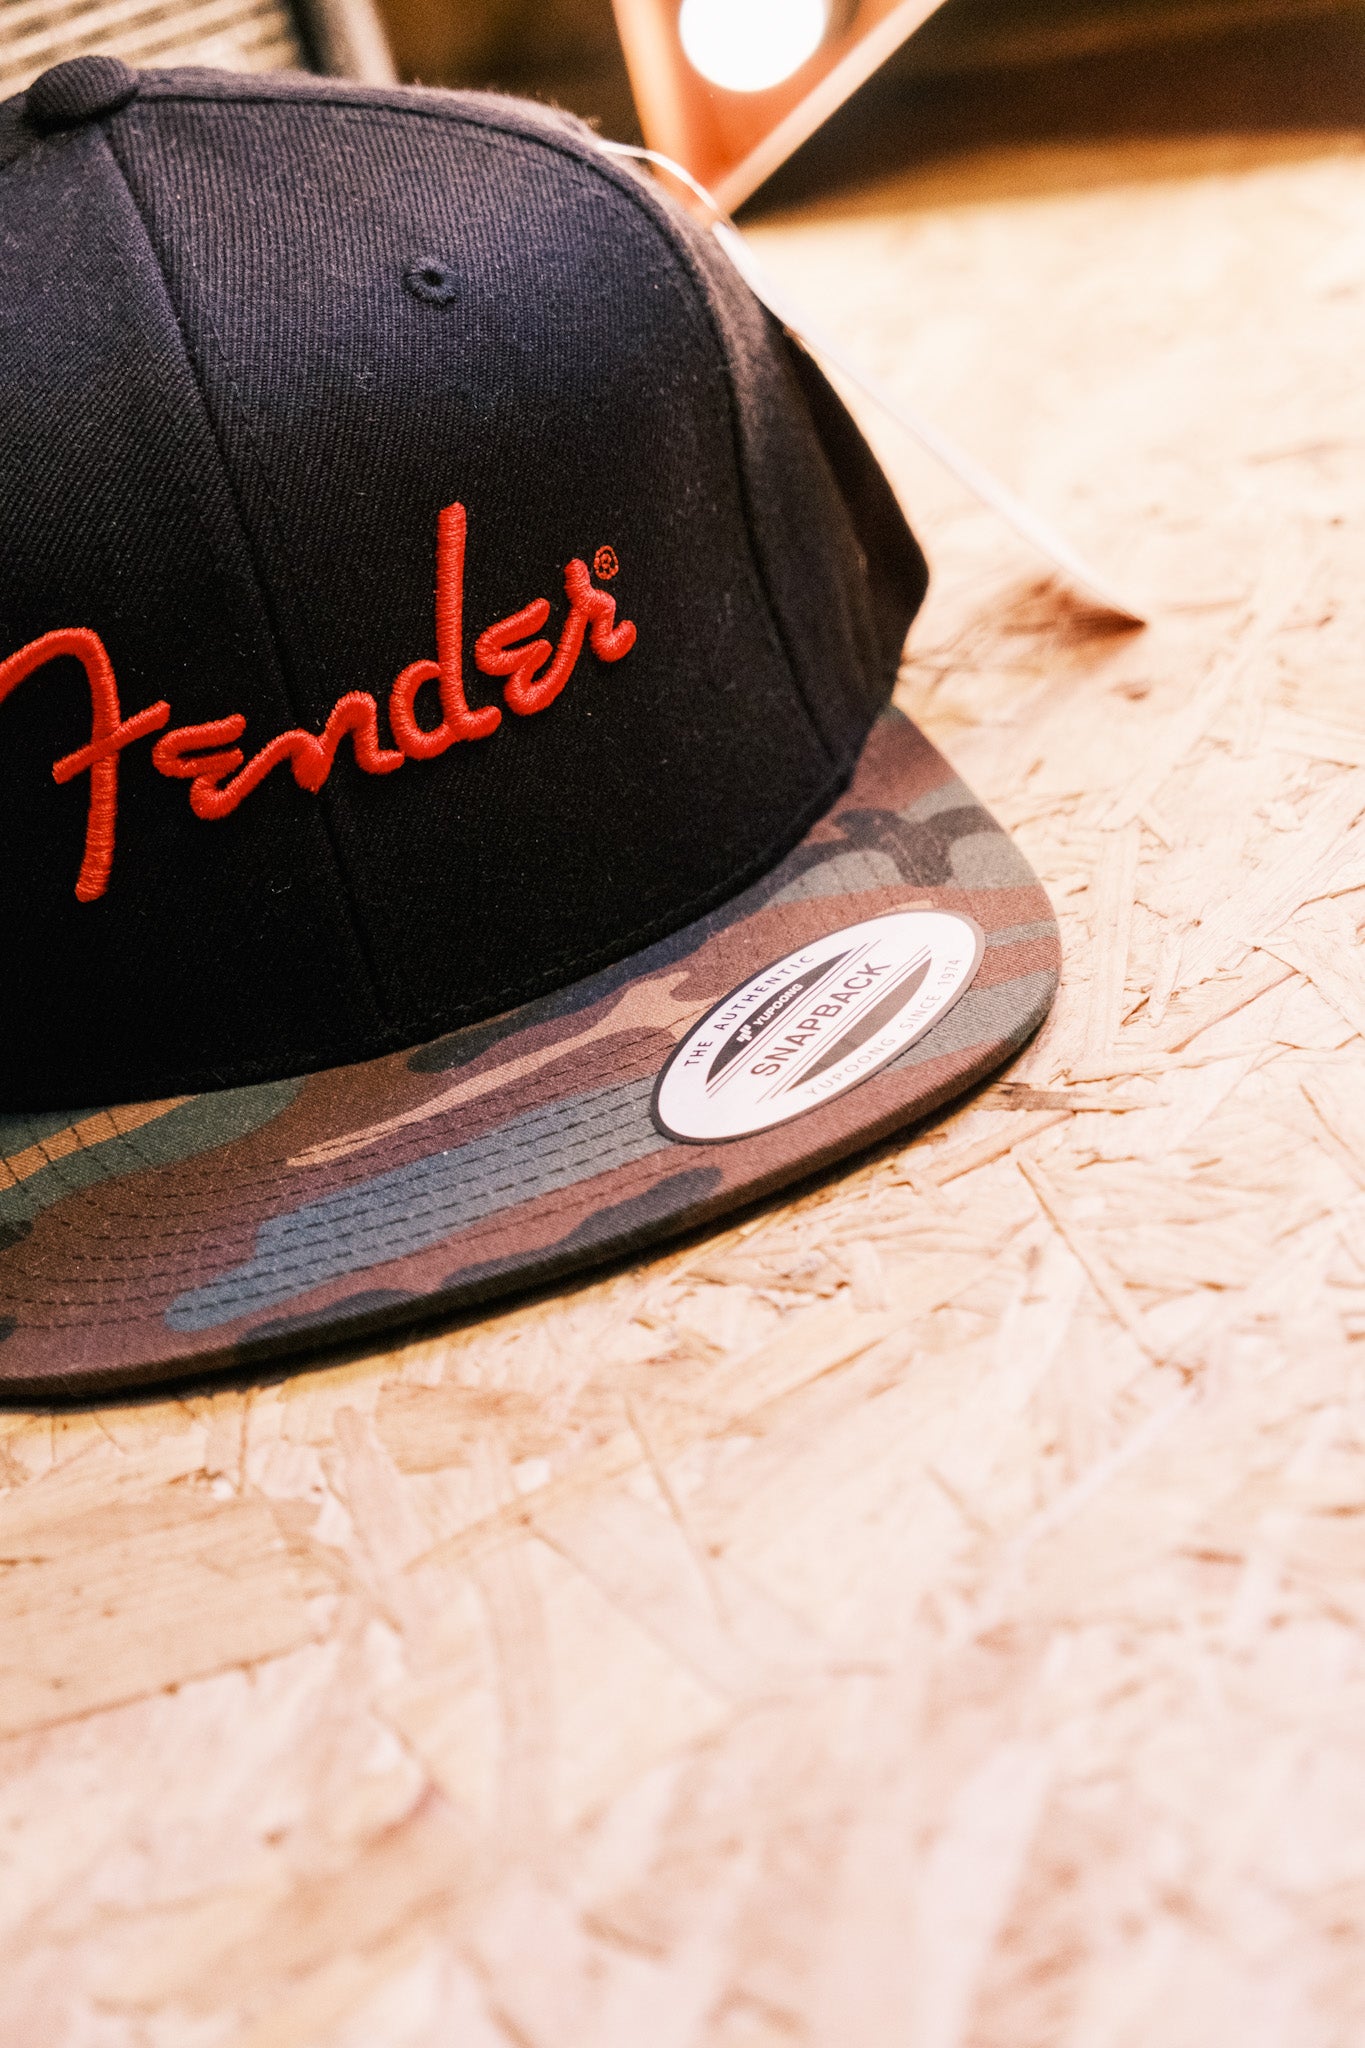 Fender Camo Flatbill Hat